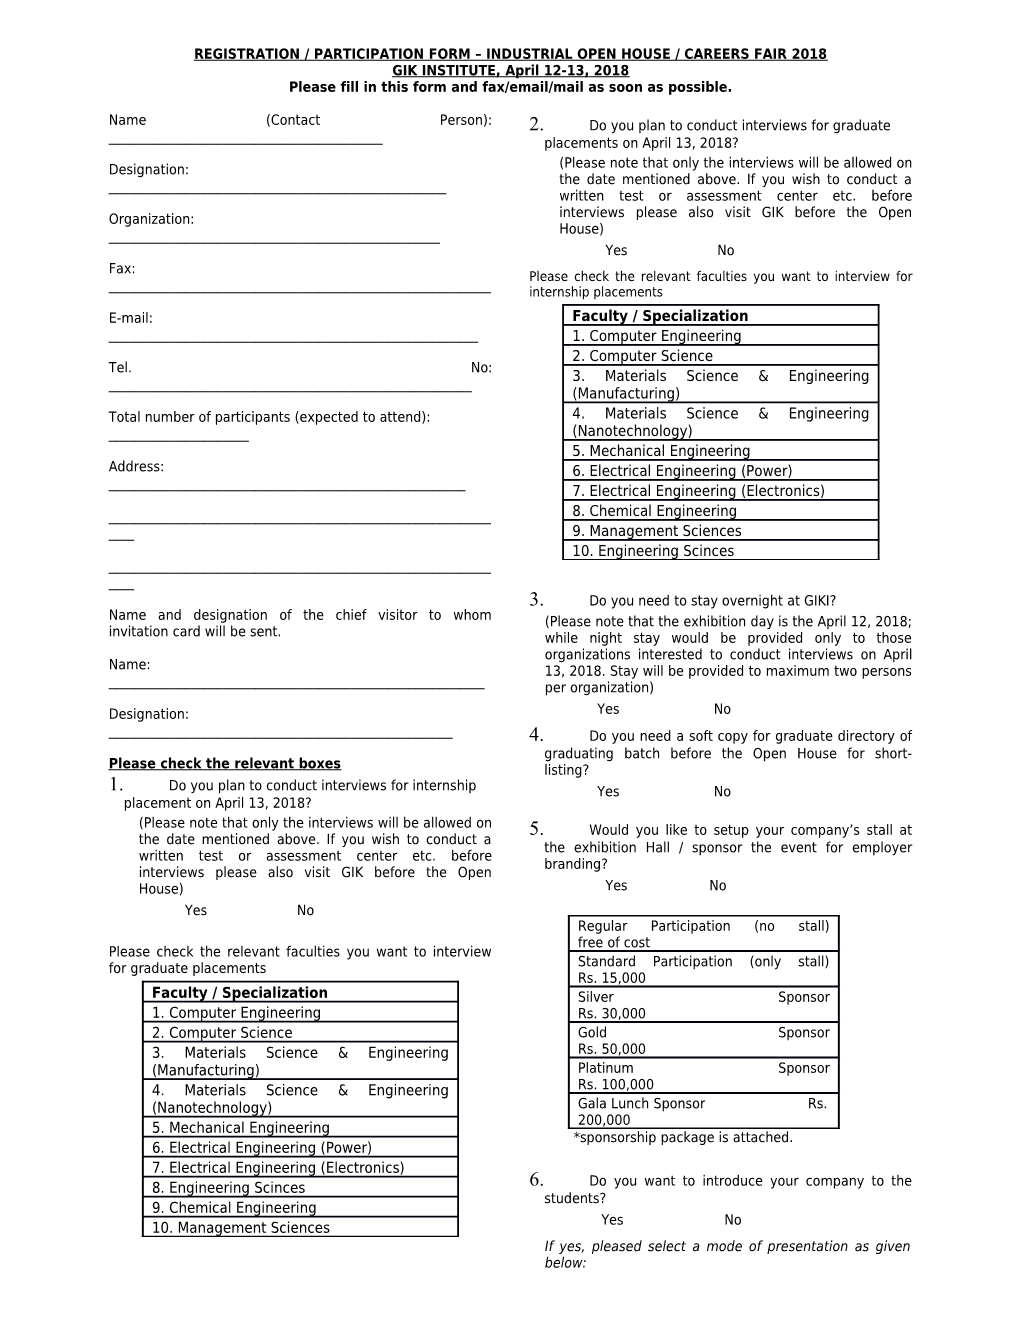 Registration Form (Open House 2007)